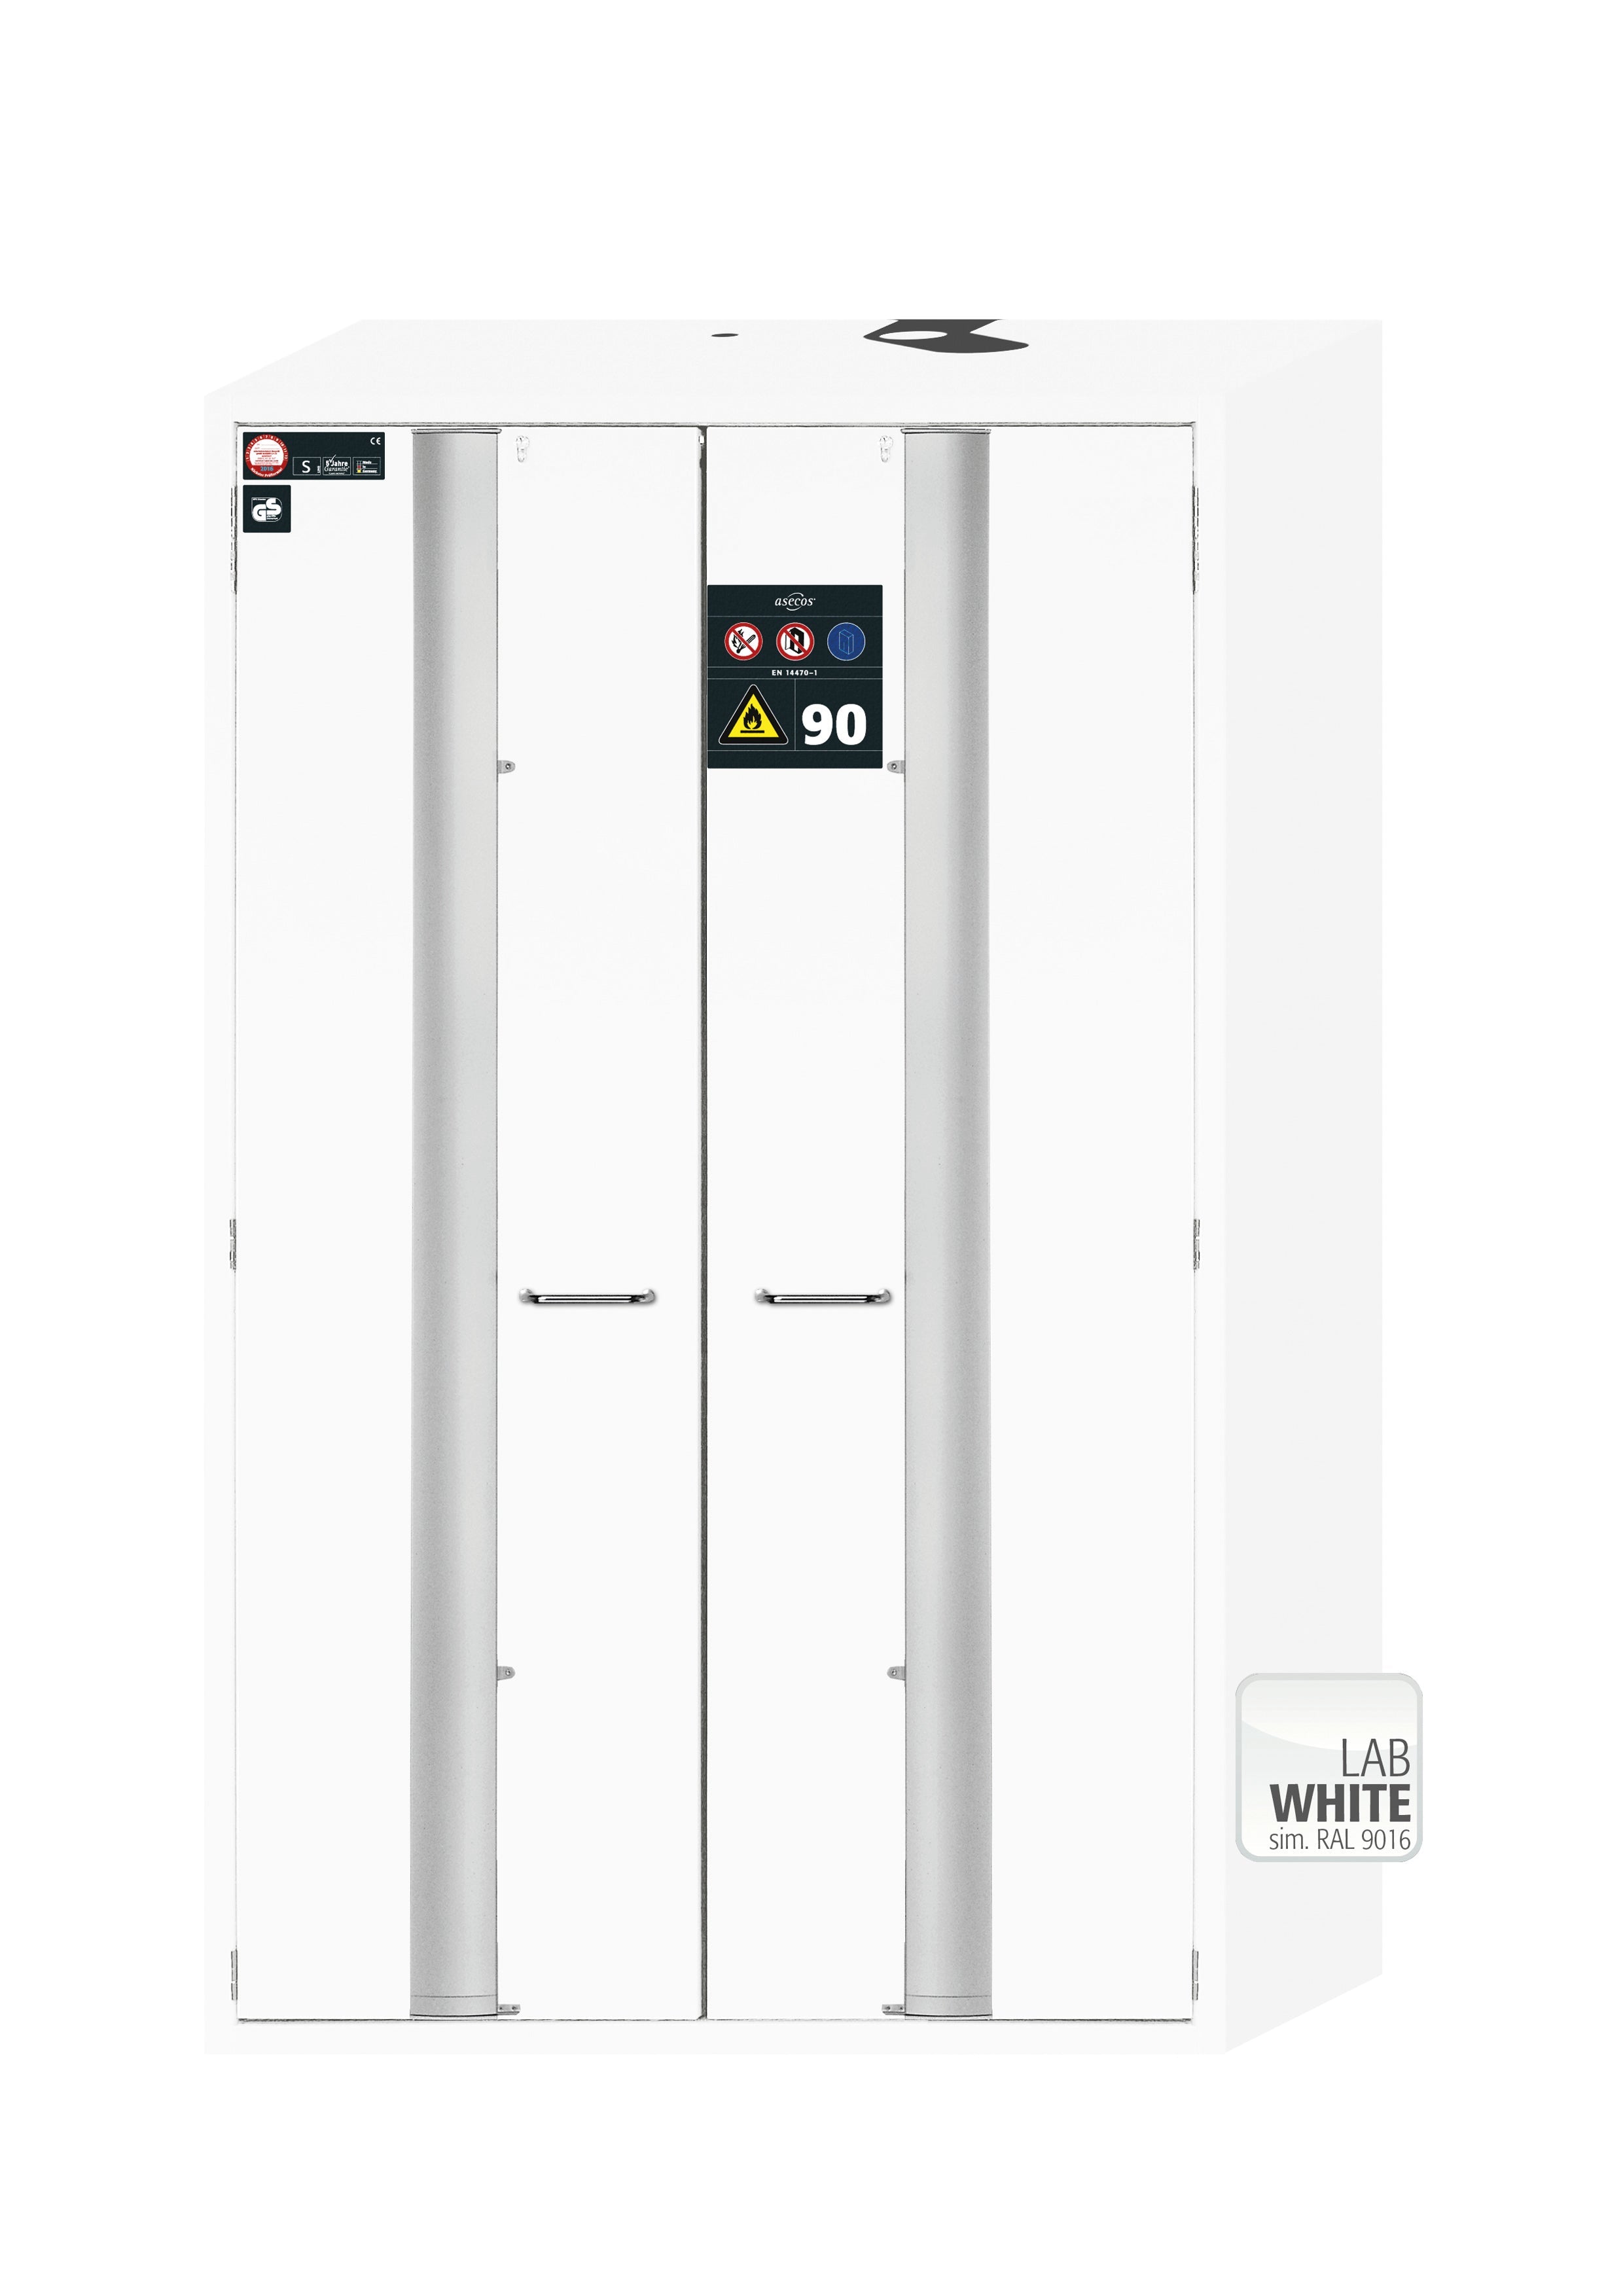 Type 90 safety storage cabinet S-PHOENIX-90 model S90.196.120.FDAS in laboratory white (sim. RAL 9016) with 6x drawer (standard) (sheet steel),